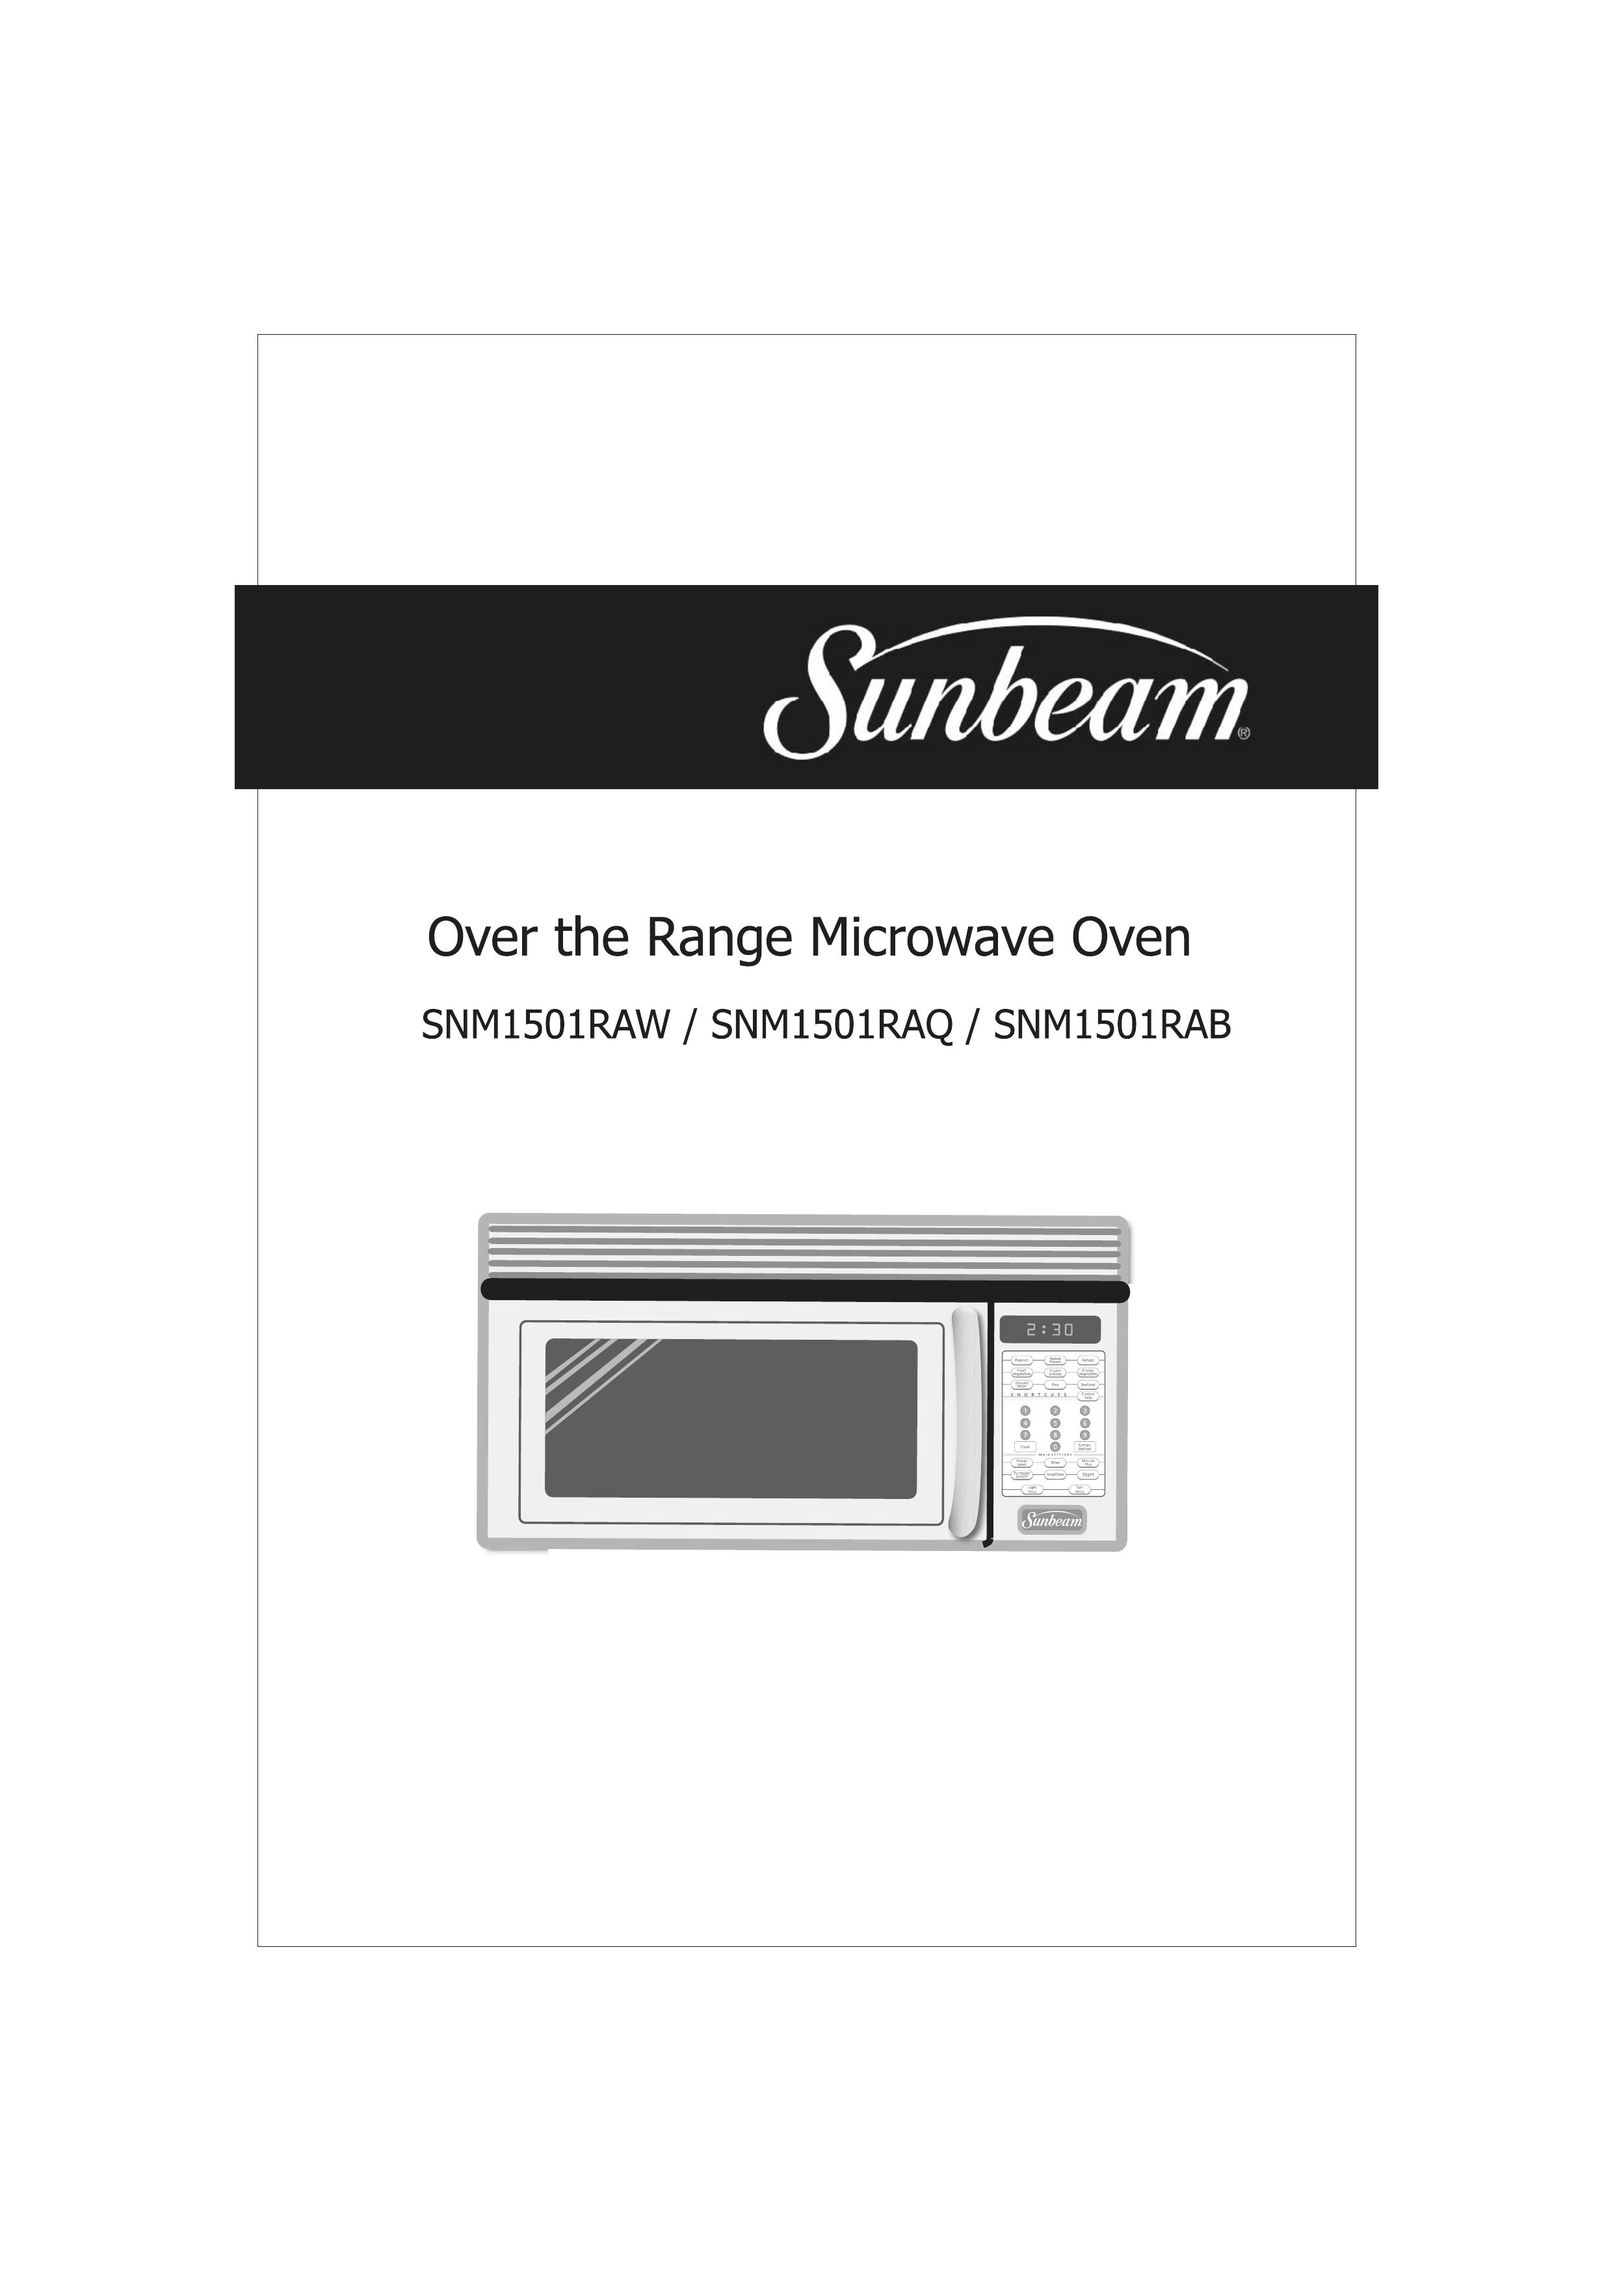 Sunbeam Major Appliances SNM1501RAQ Microwave Oven User Manual